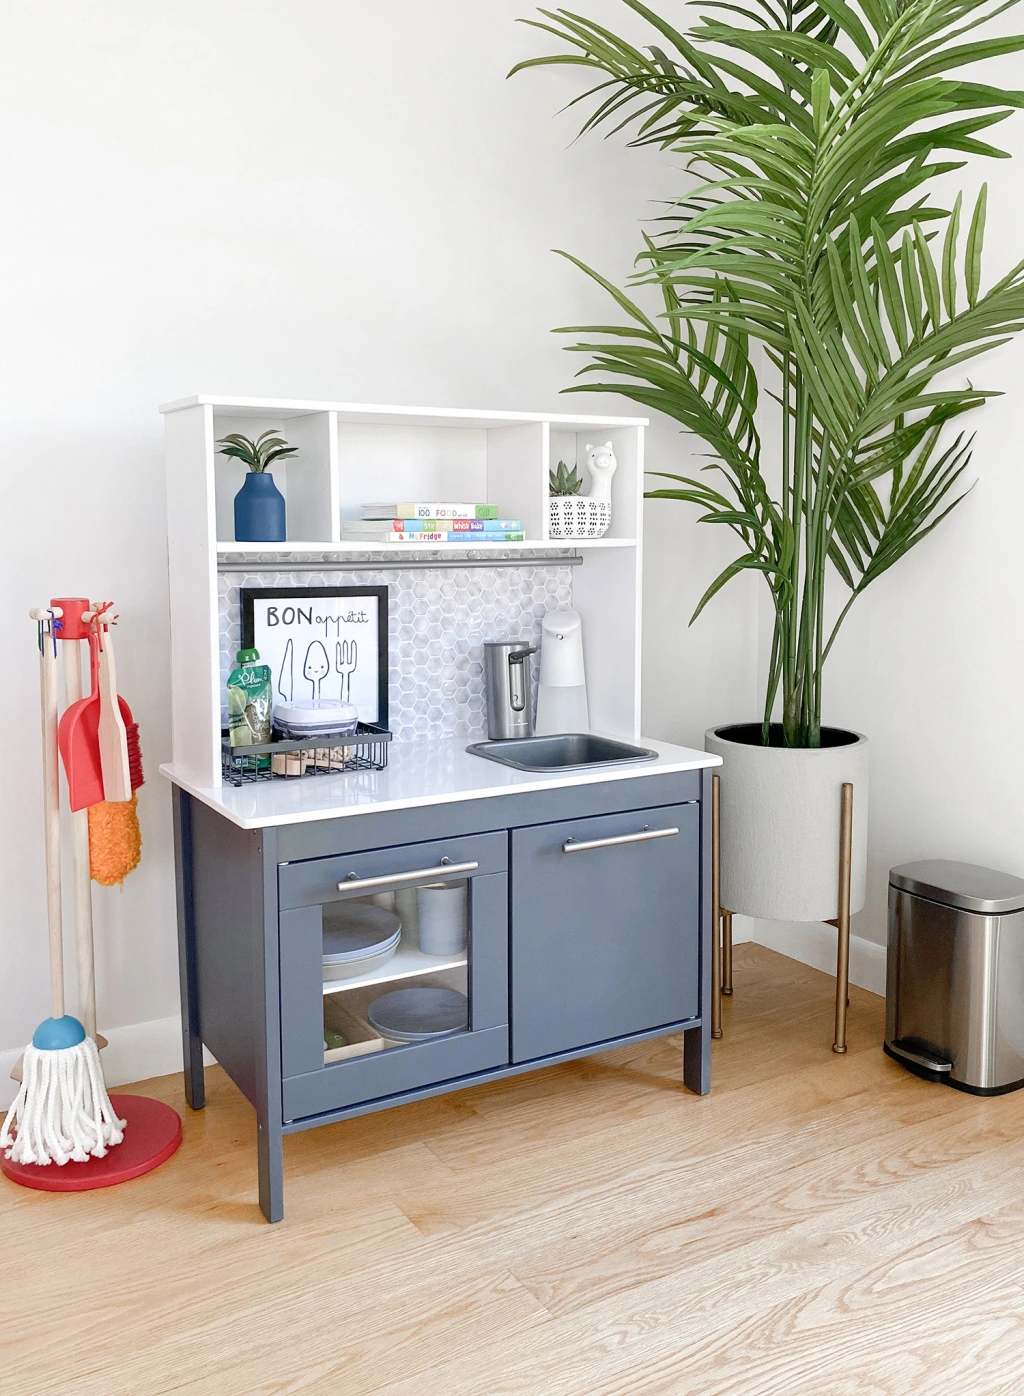 DIY: IKEA Duktig Functional Kitchen Makeover – With Plumbing!